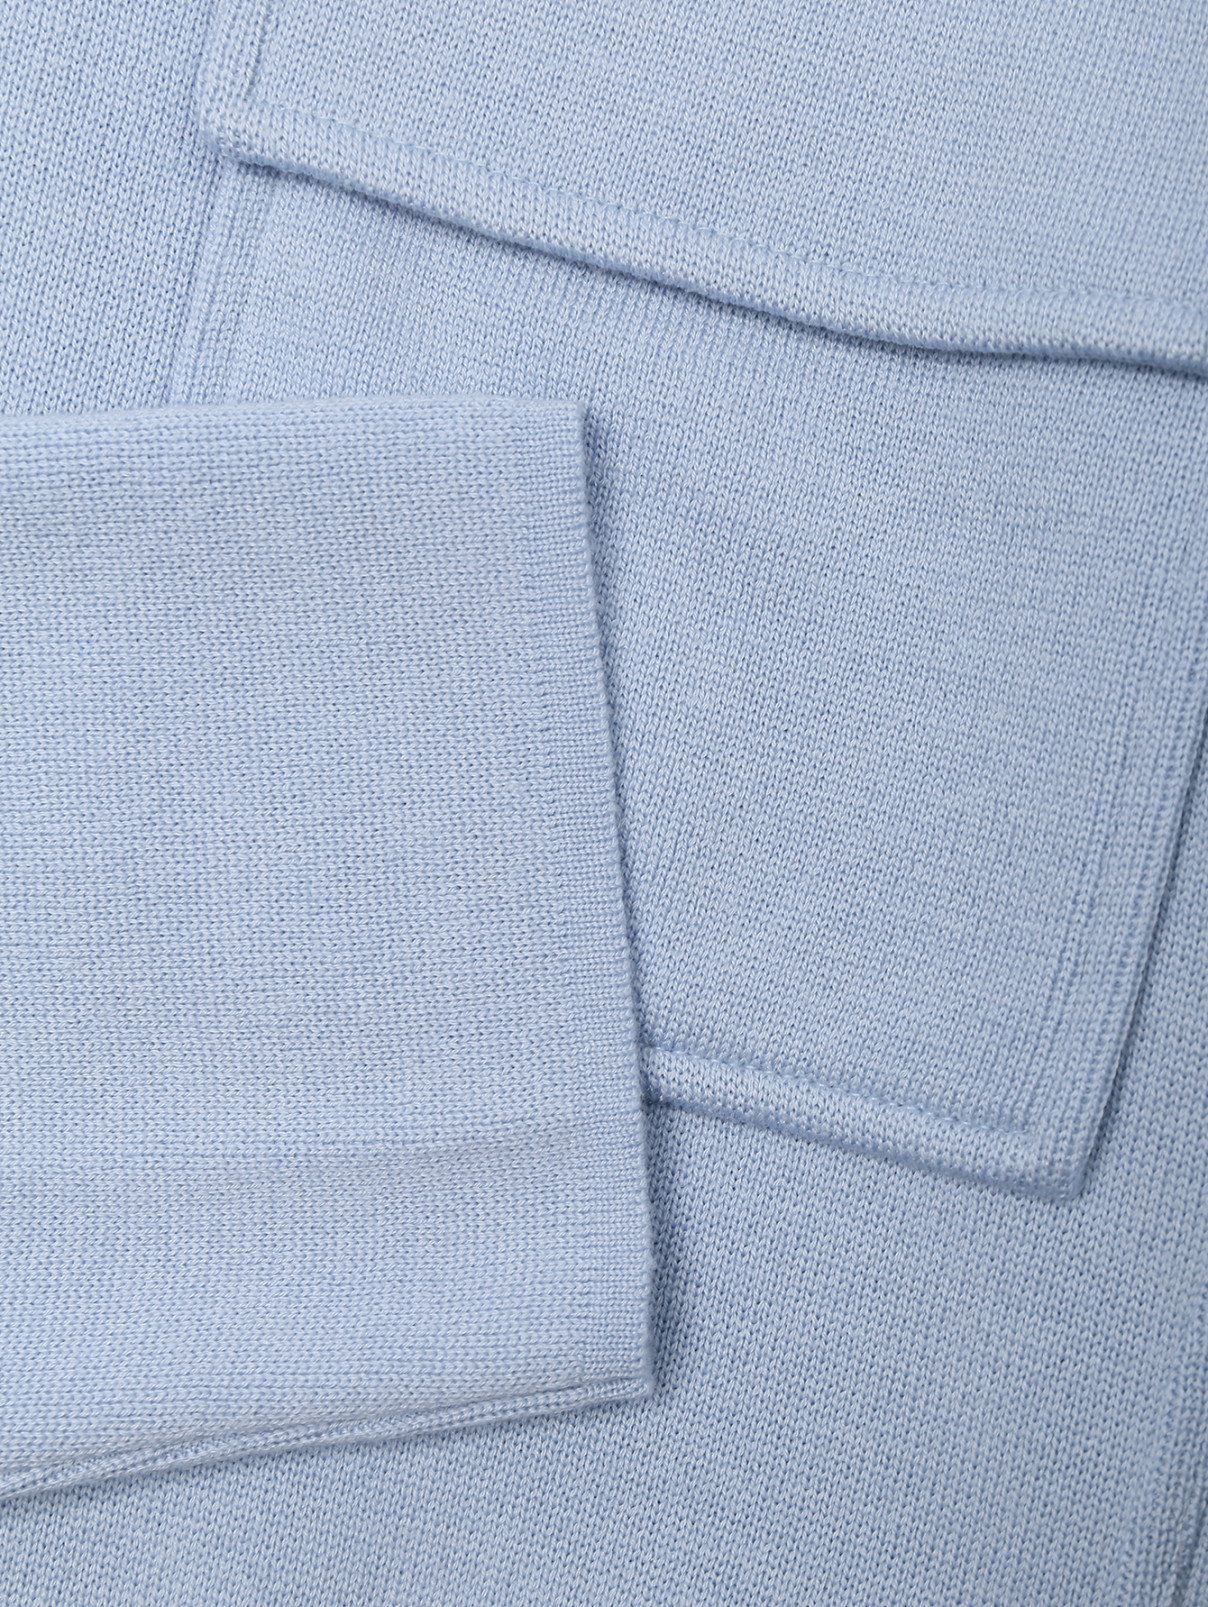 Кардиган на пуговицах с накладными карманами LARDINI  –  Деталь  – Цвет:  Синий